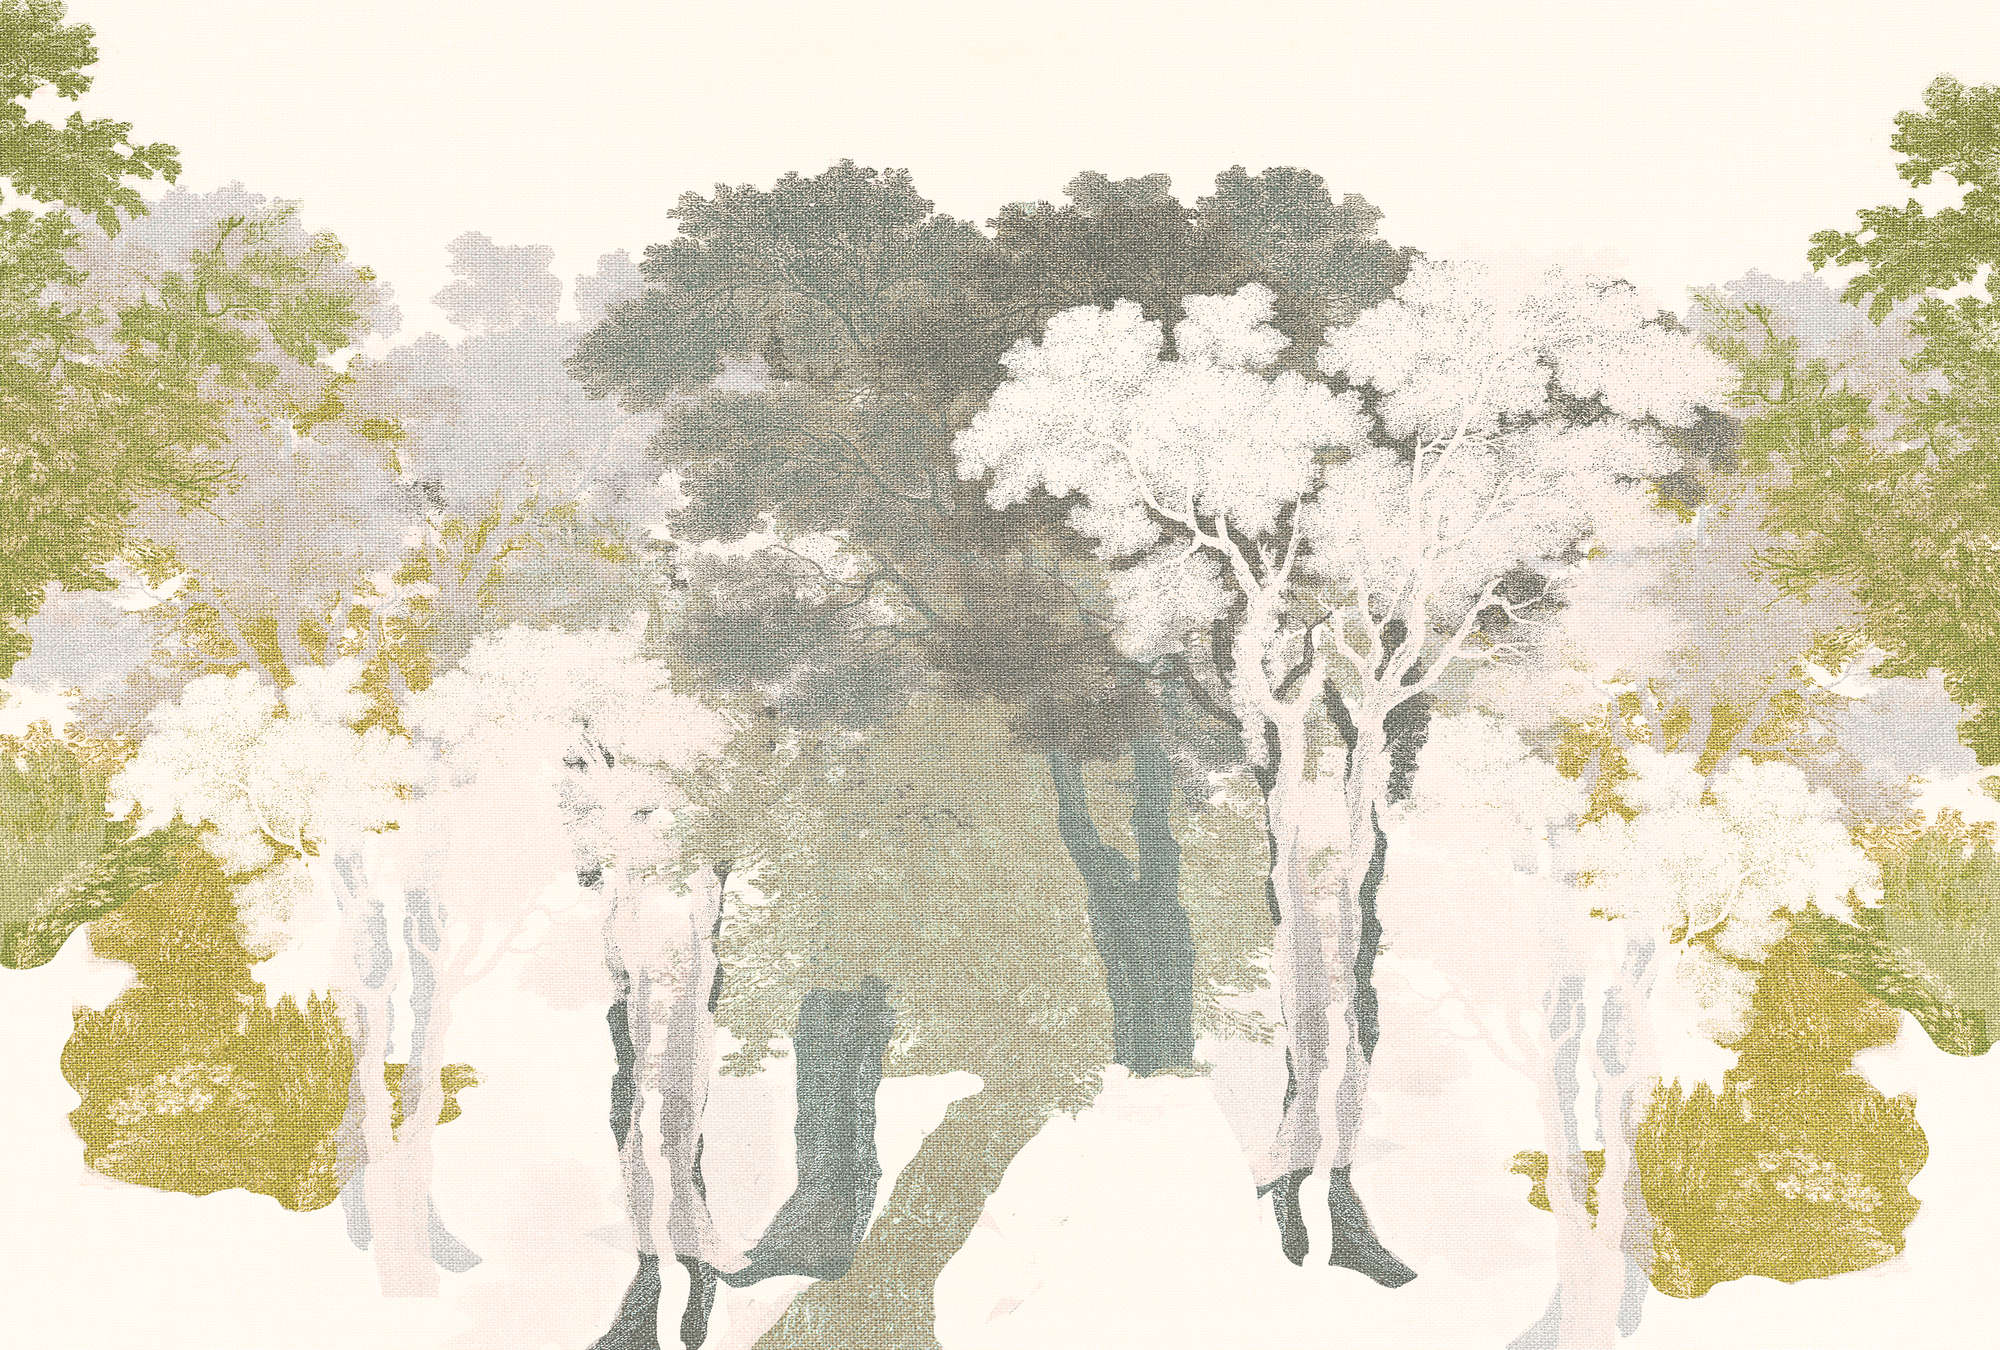             Fototapete Bäume, Wald-Design & Leinenoptik – Grün, Grau, Weiß
        